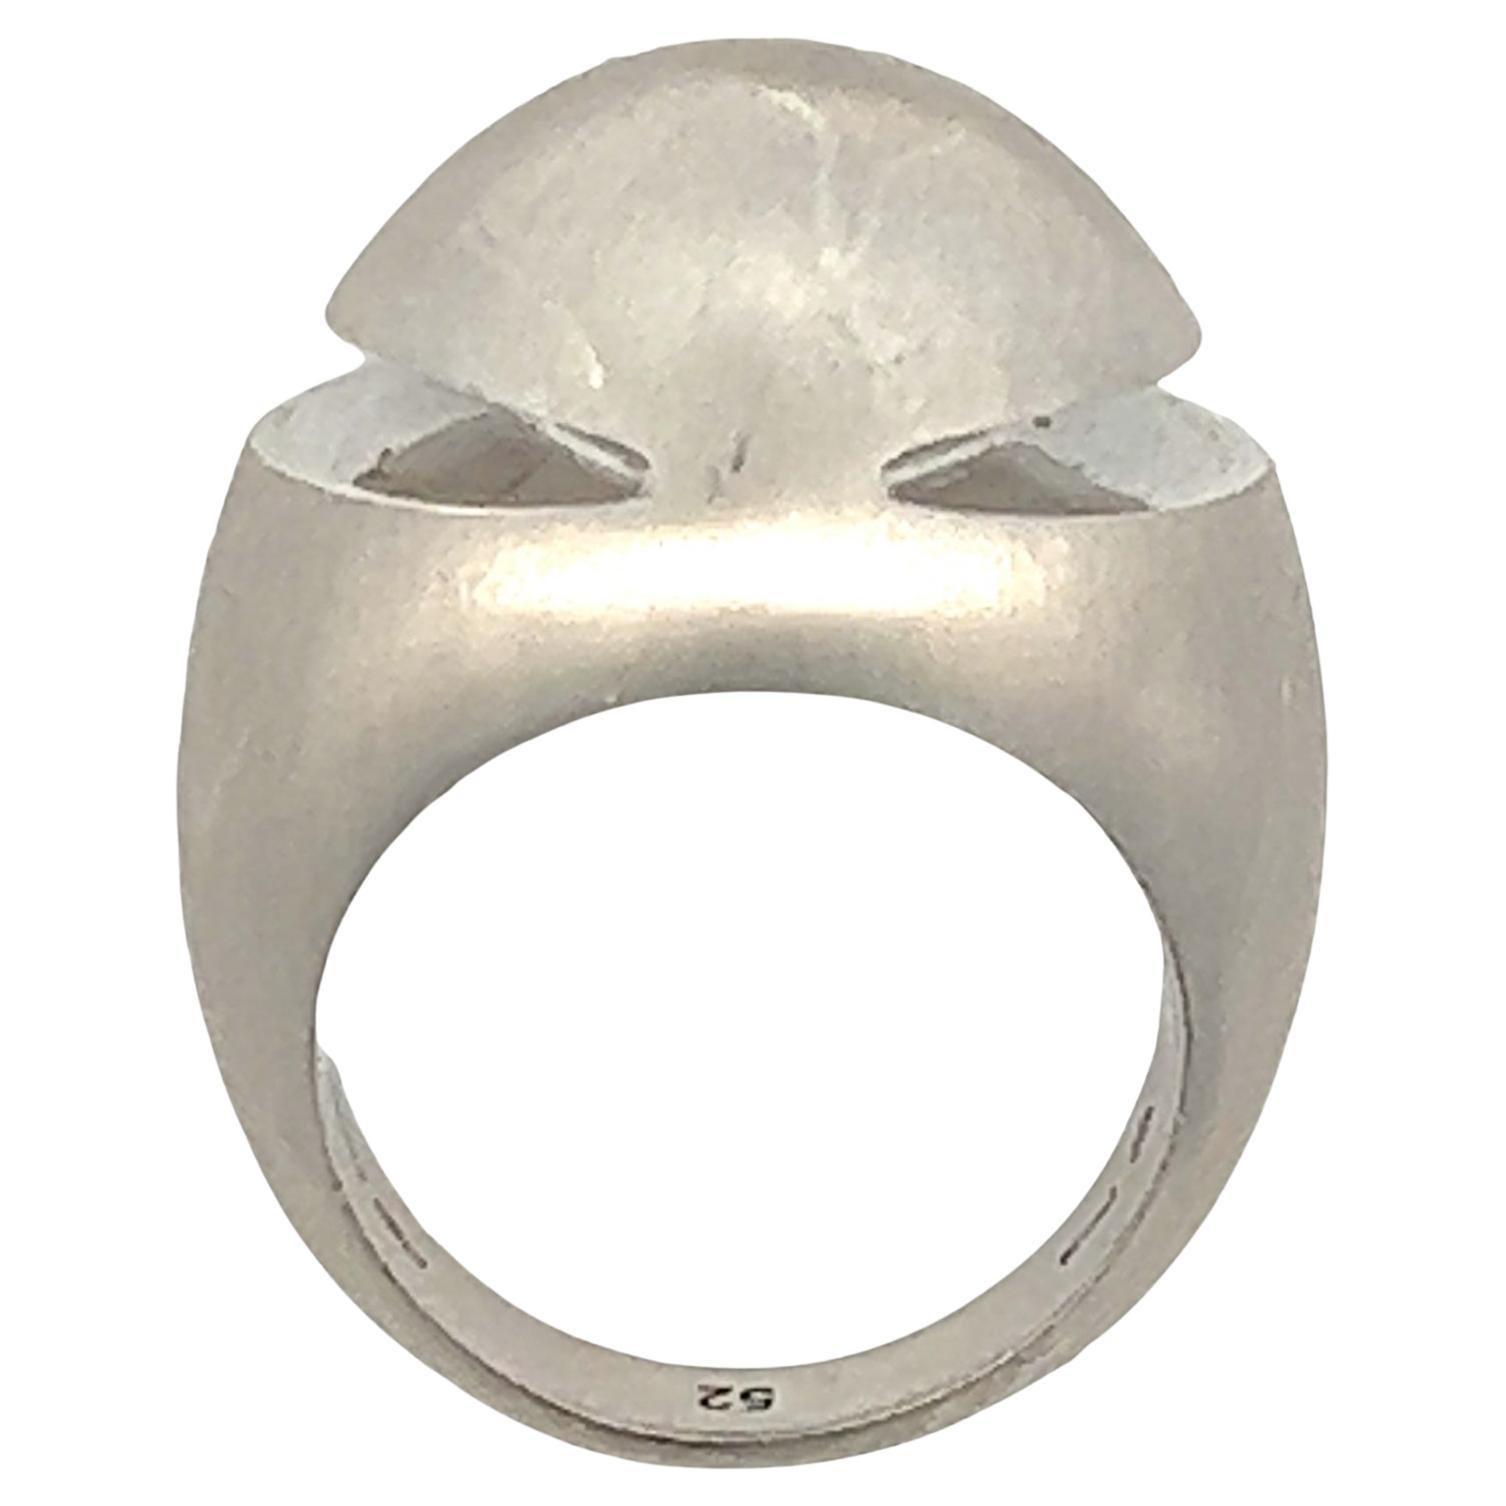 Bvlgari 18 Karat White Satin Finish Gold Dome Cabochon Contemporary Ring Sz 52  For Sale